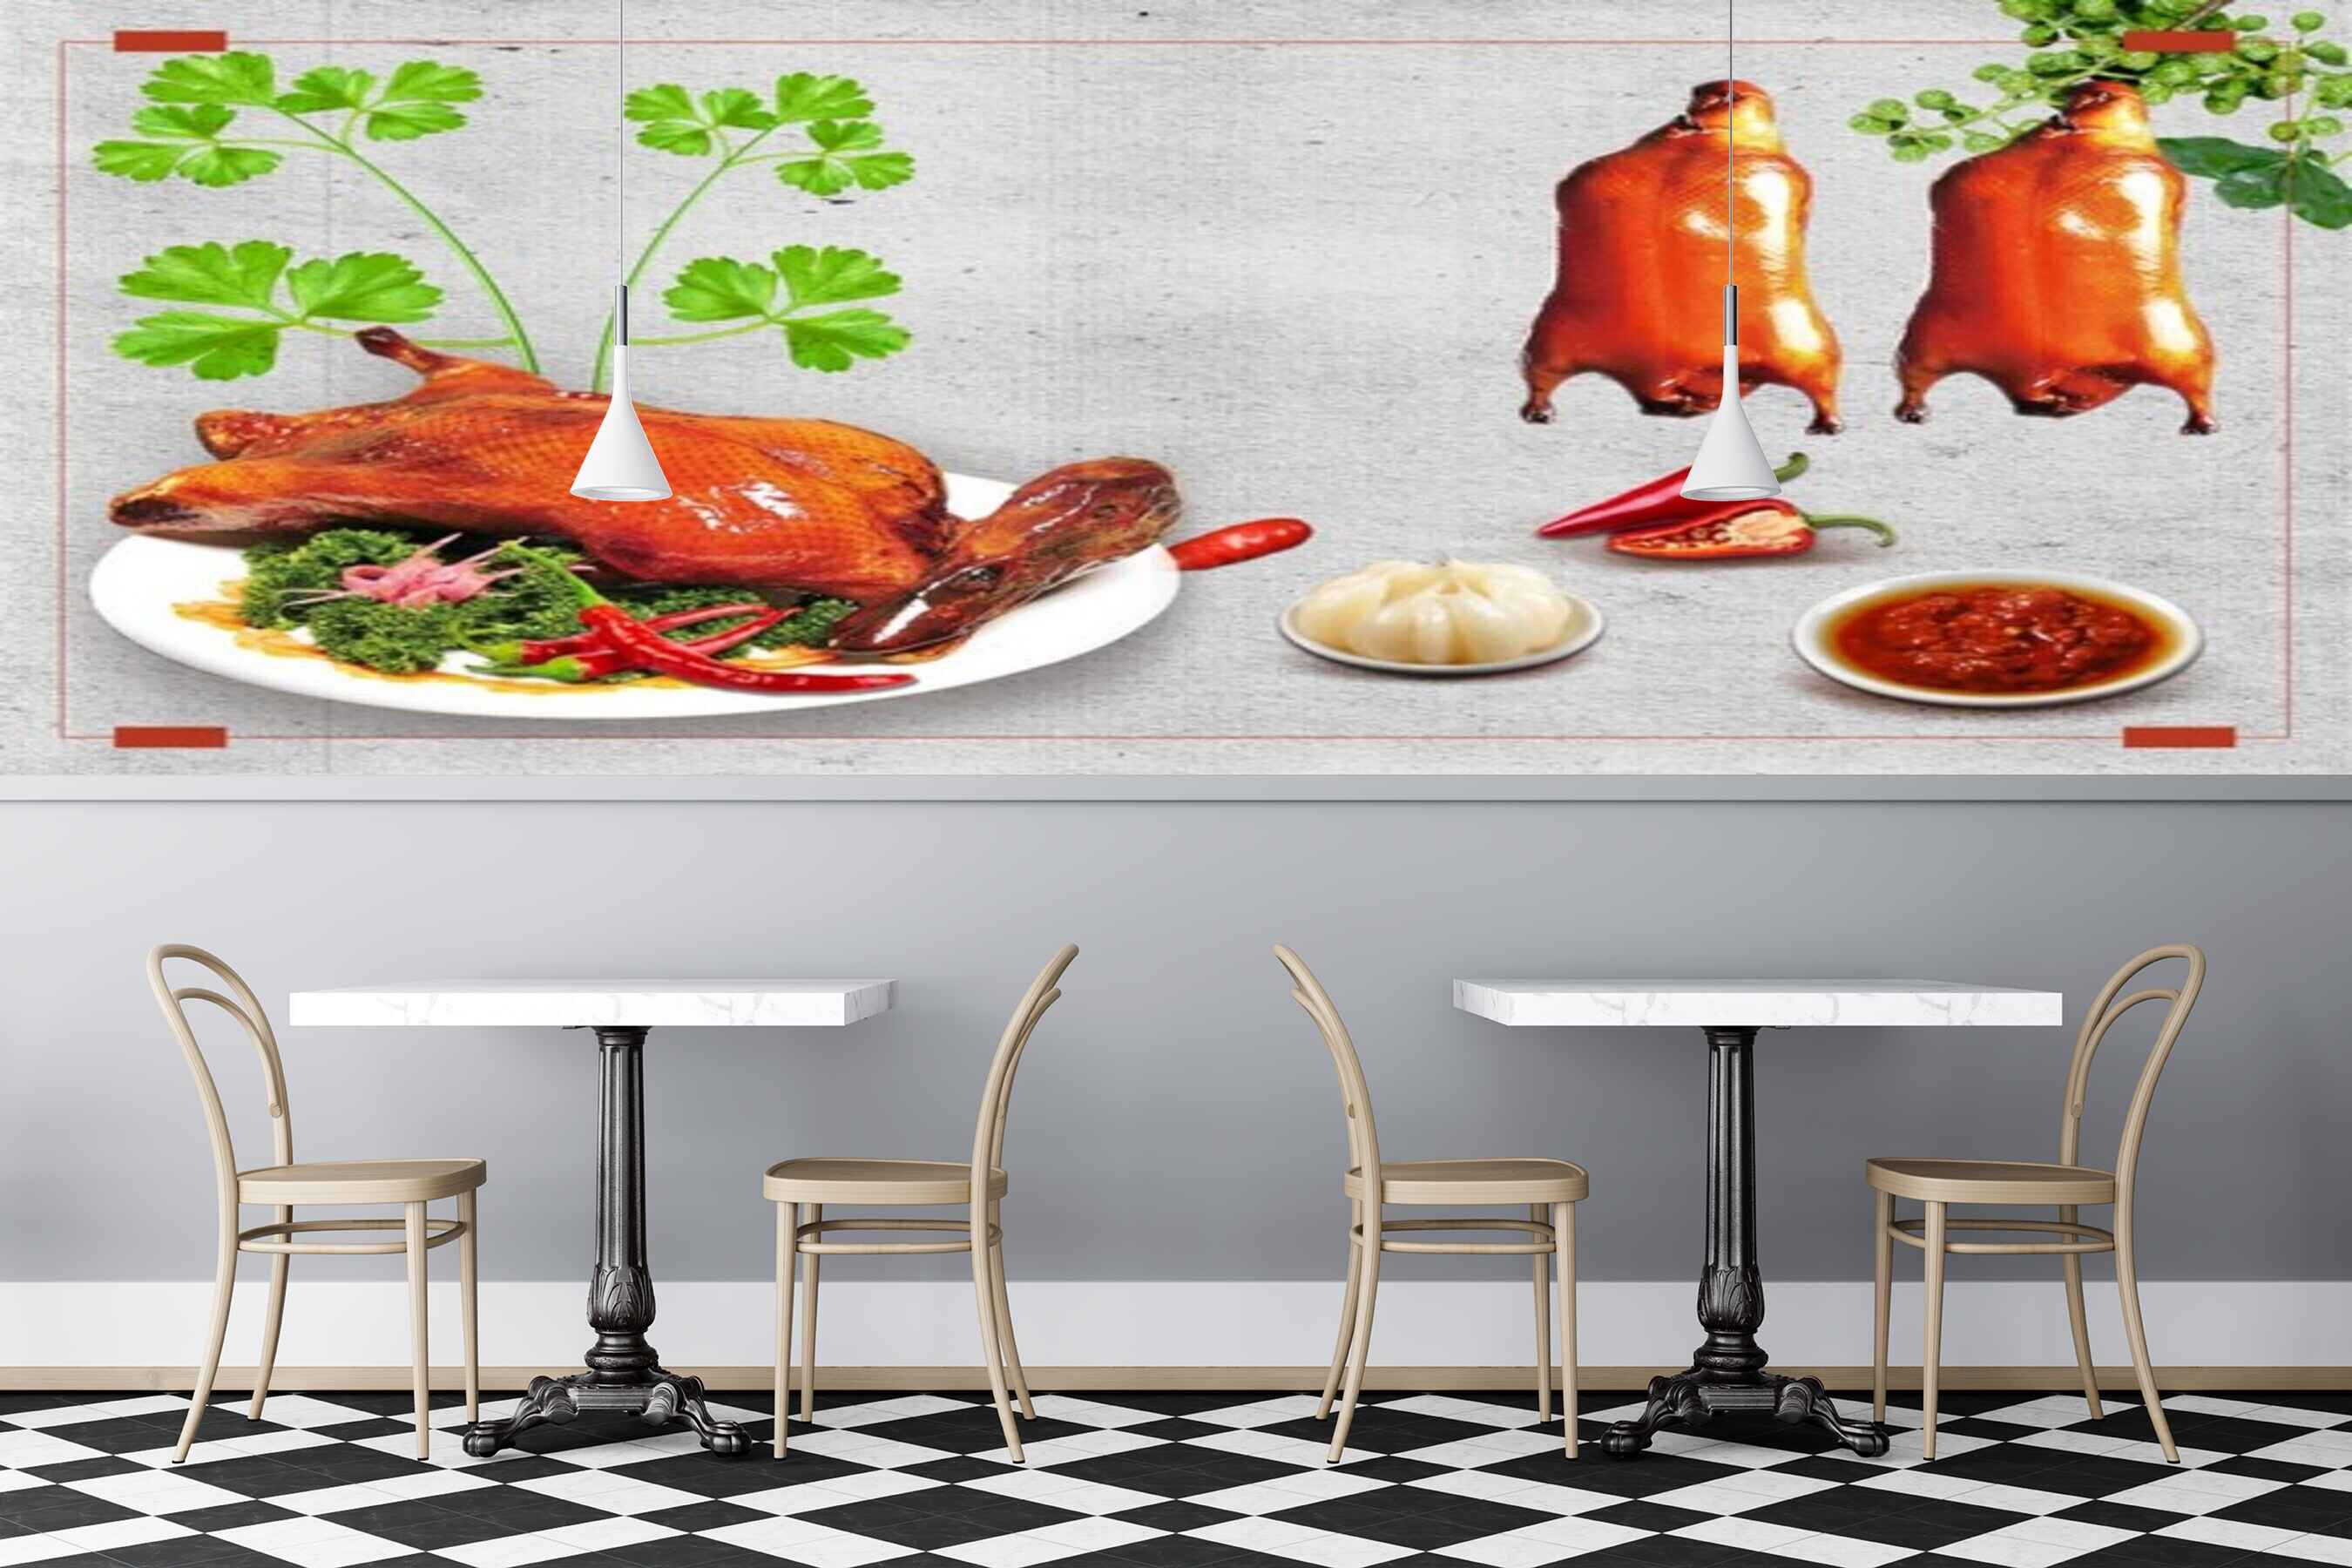 Avikalp MWZ3172 Meat Garlic Mirchi Coriander HD Wallpaper for Cafe Restaurant